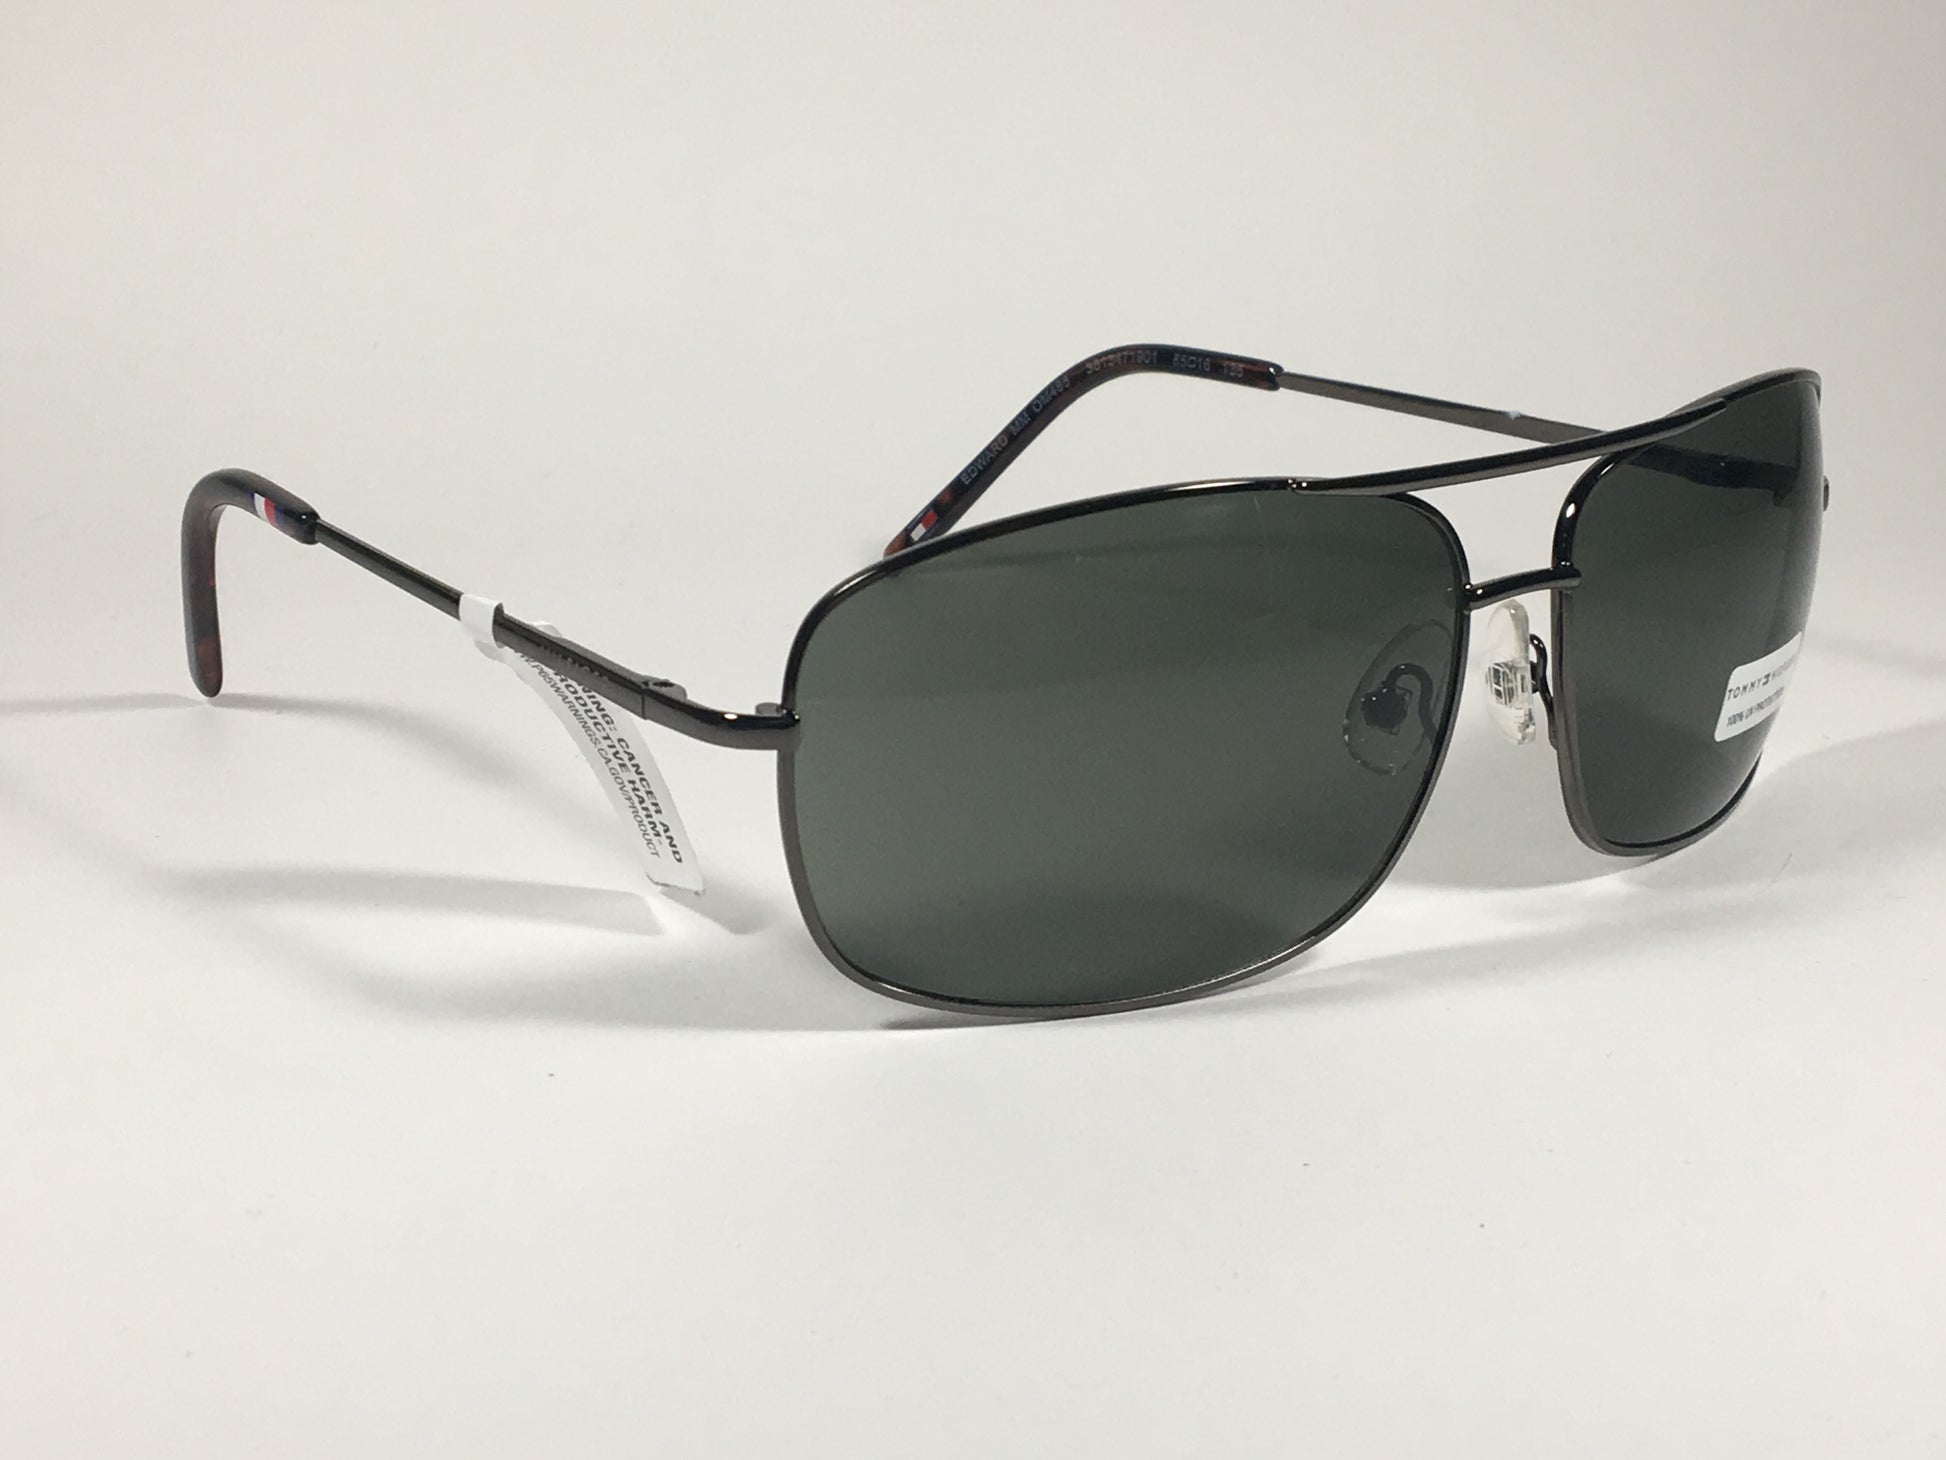 Tommy Hilfiger Edward Rectangle Sunglasses Gunmetal Frame Gray Green Lens EDWARD MM OM48 - Sunglasses